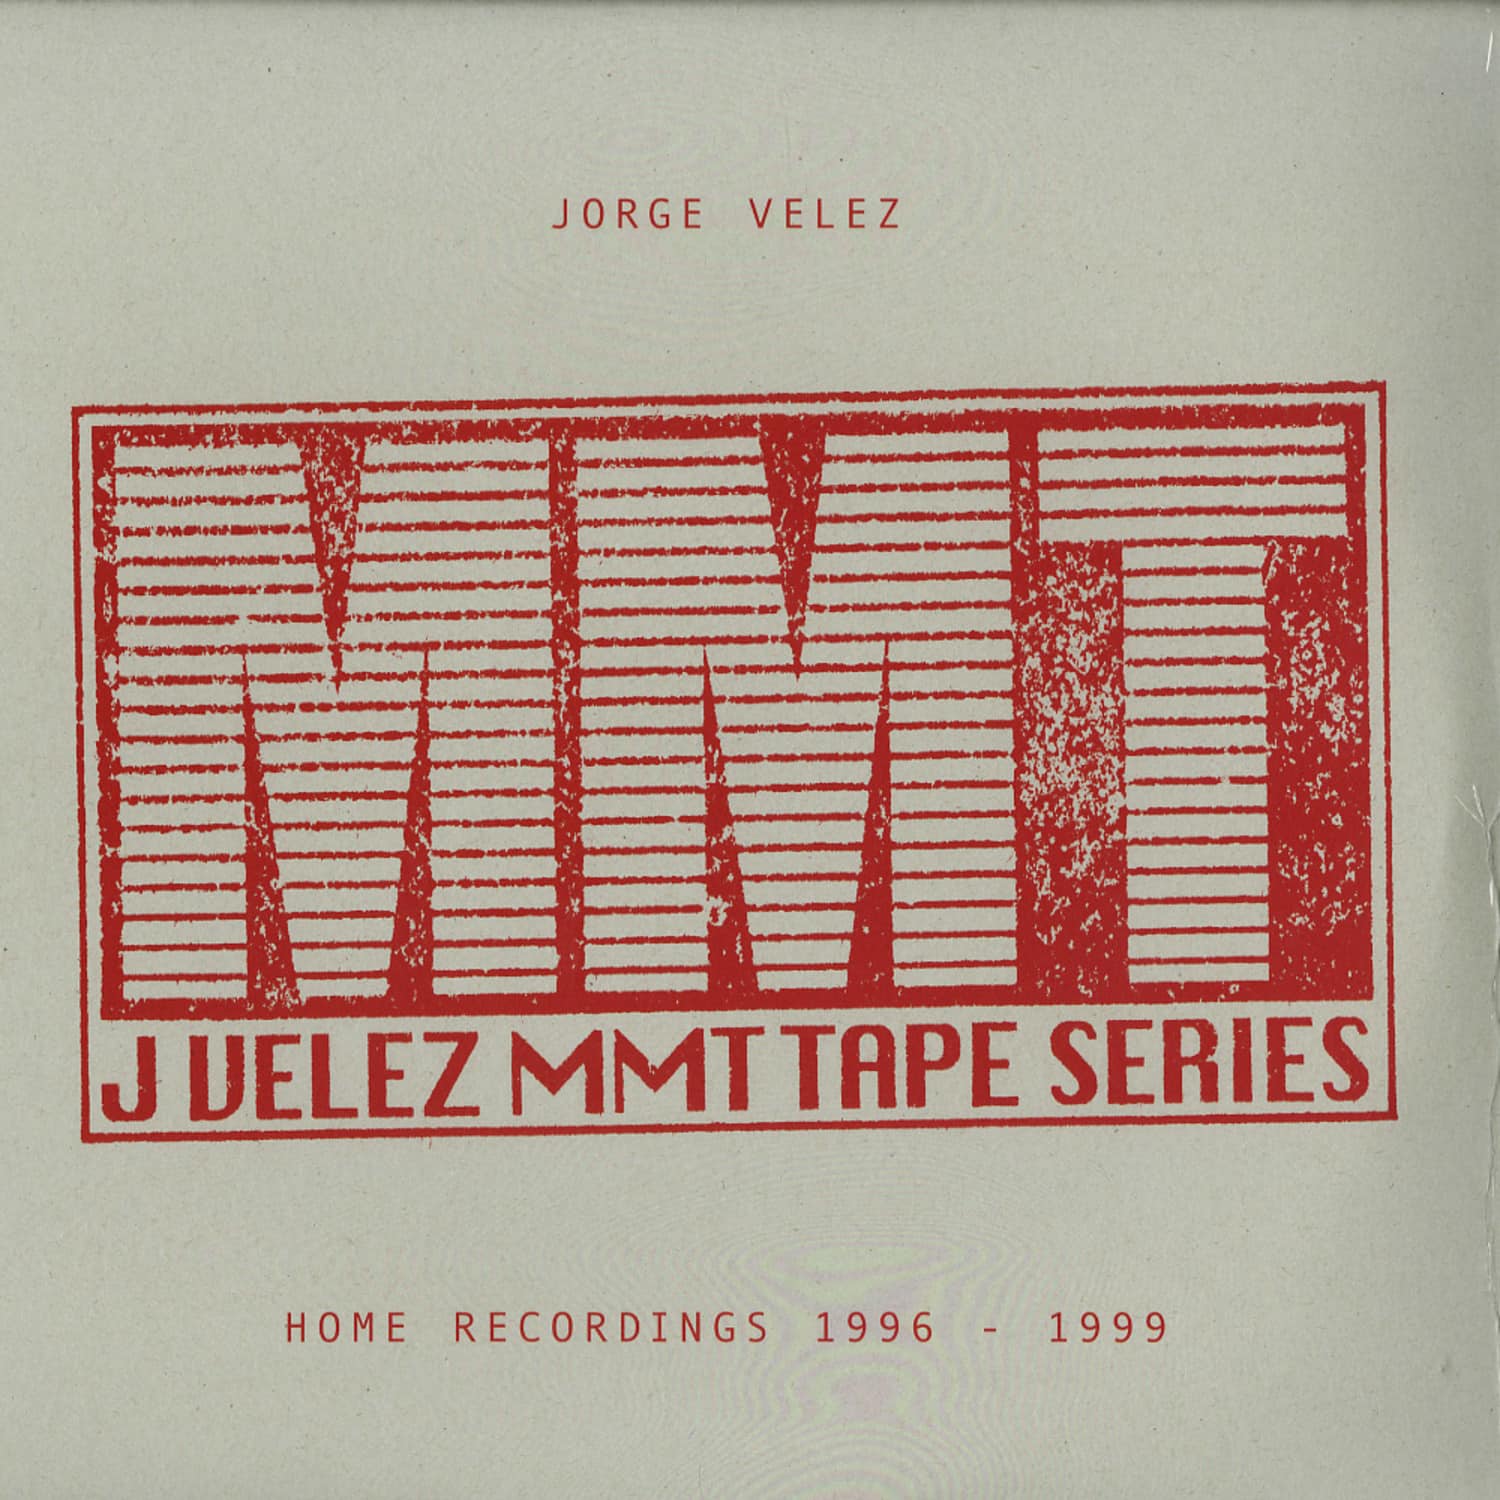 Jorge Velez - MMT TAPE SERIES - HOME RECORDINGS 1996 - 1999 